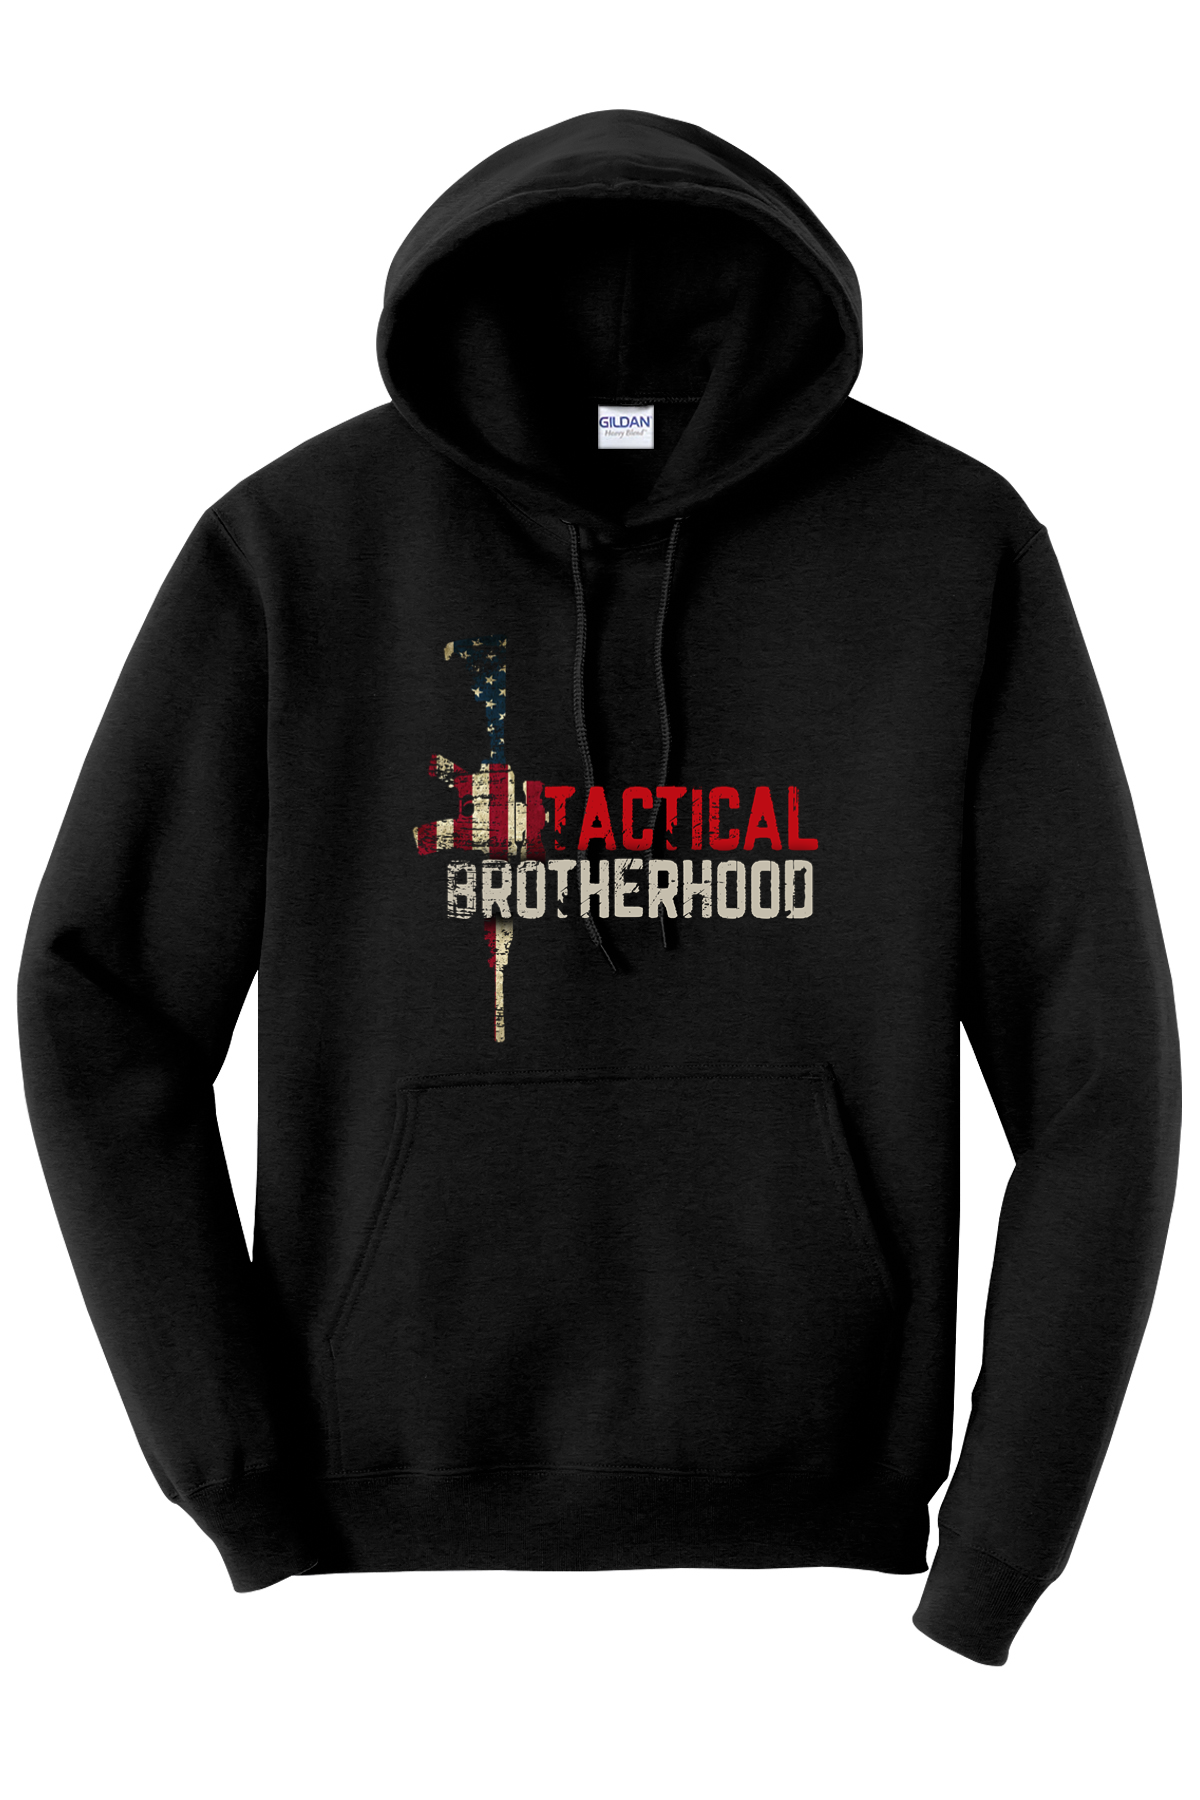 OG 5 - Tactical Brotherhood Official Hoodie